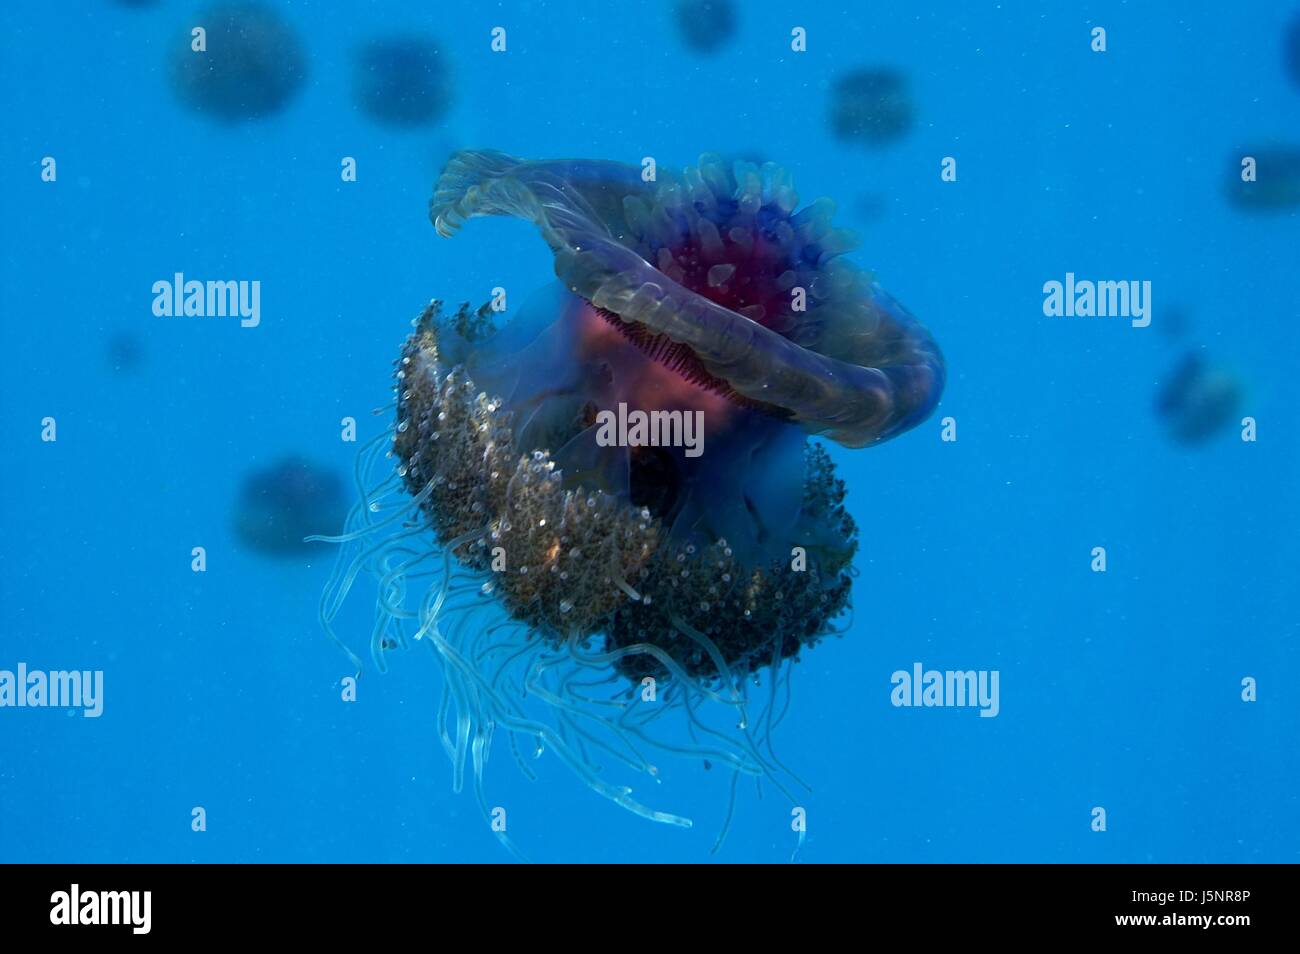 africa egypt under dive snorkel salt water sea ocean water red jellyfish Stock Photo